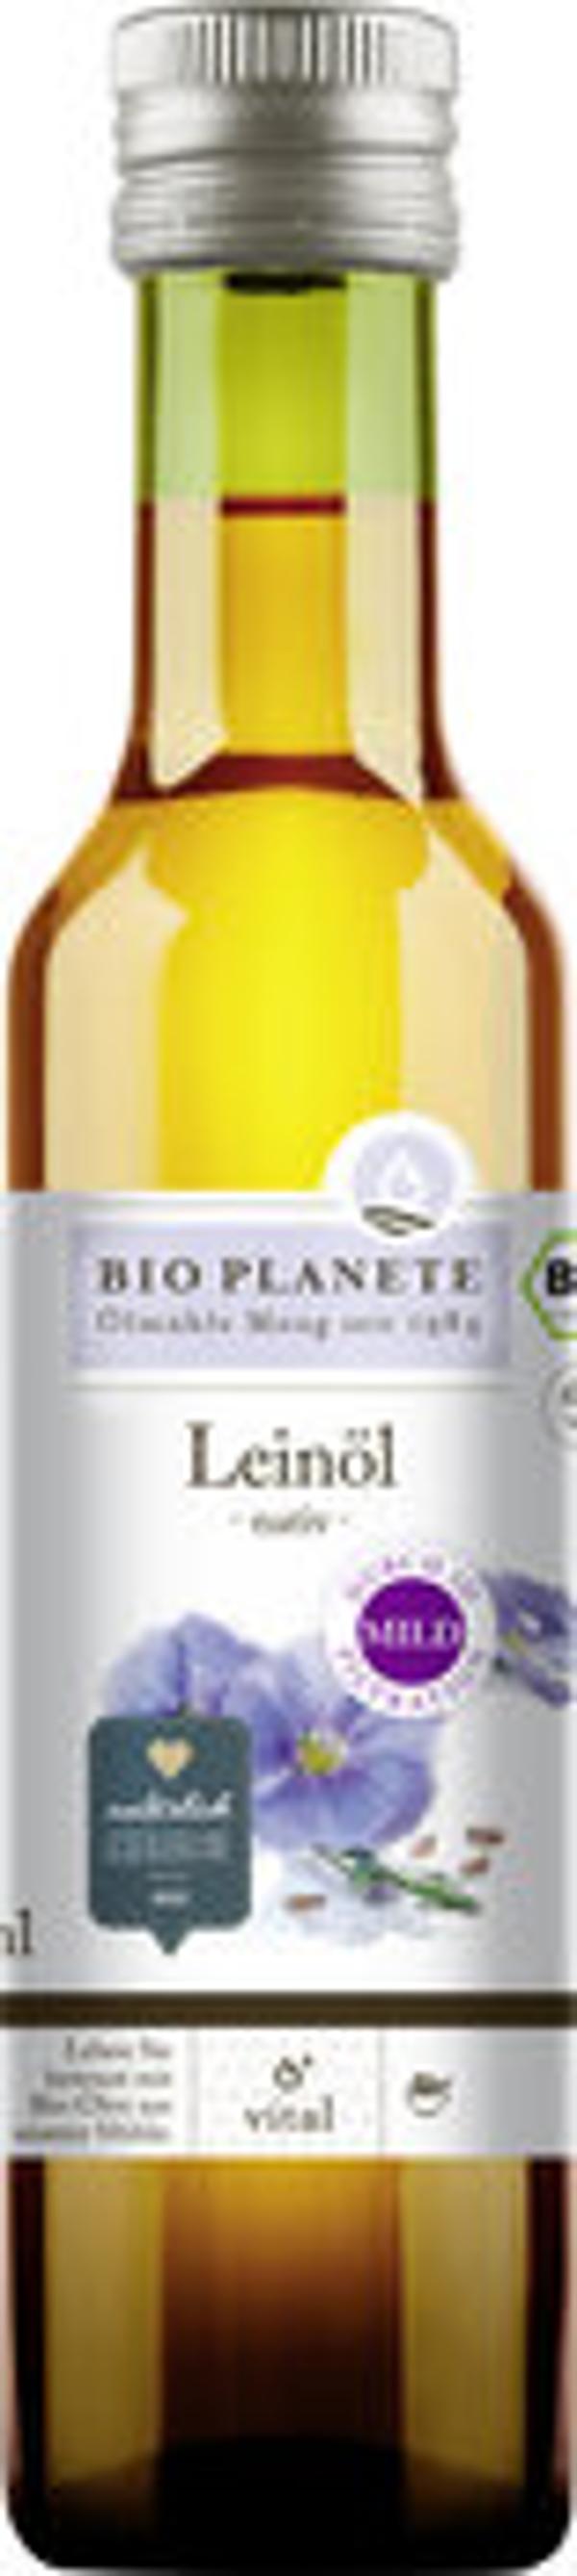 Produktfoto zu Bio Planète Leinöl nativ mild 250ml